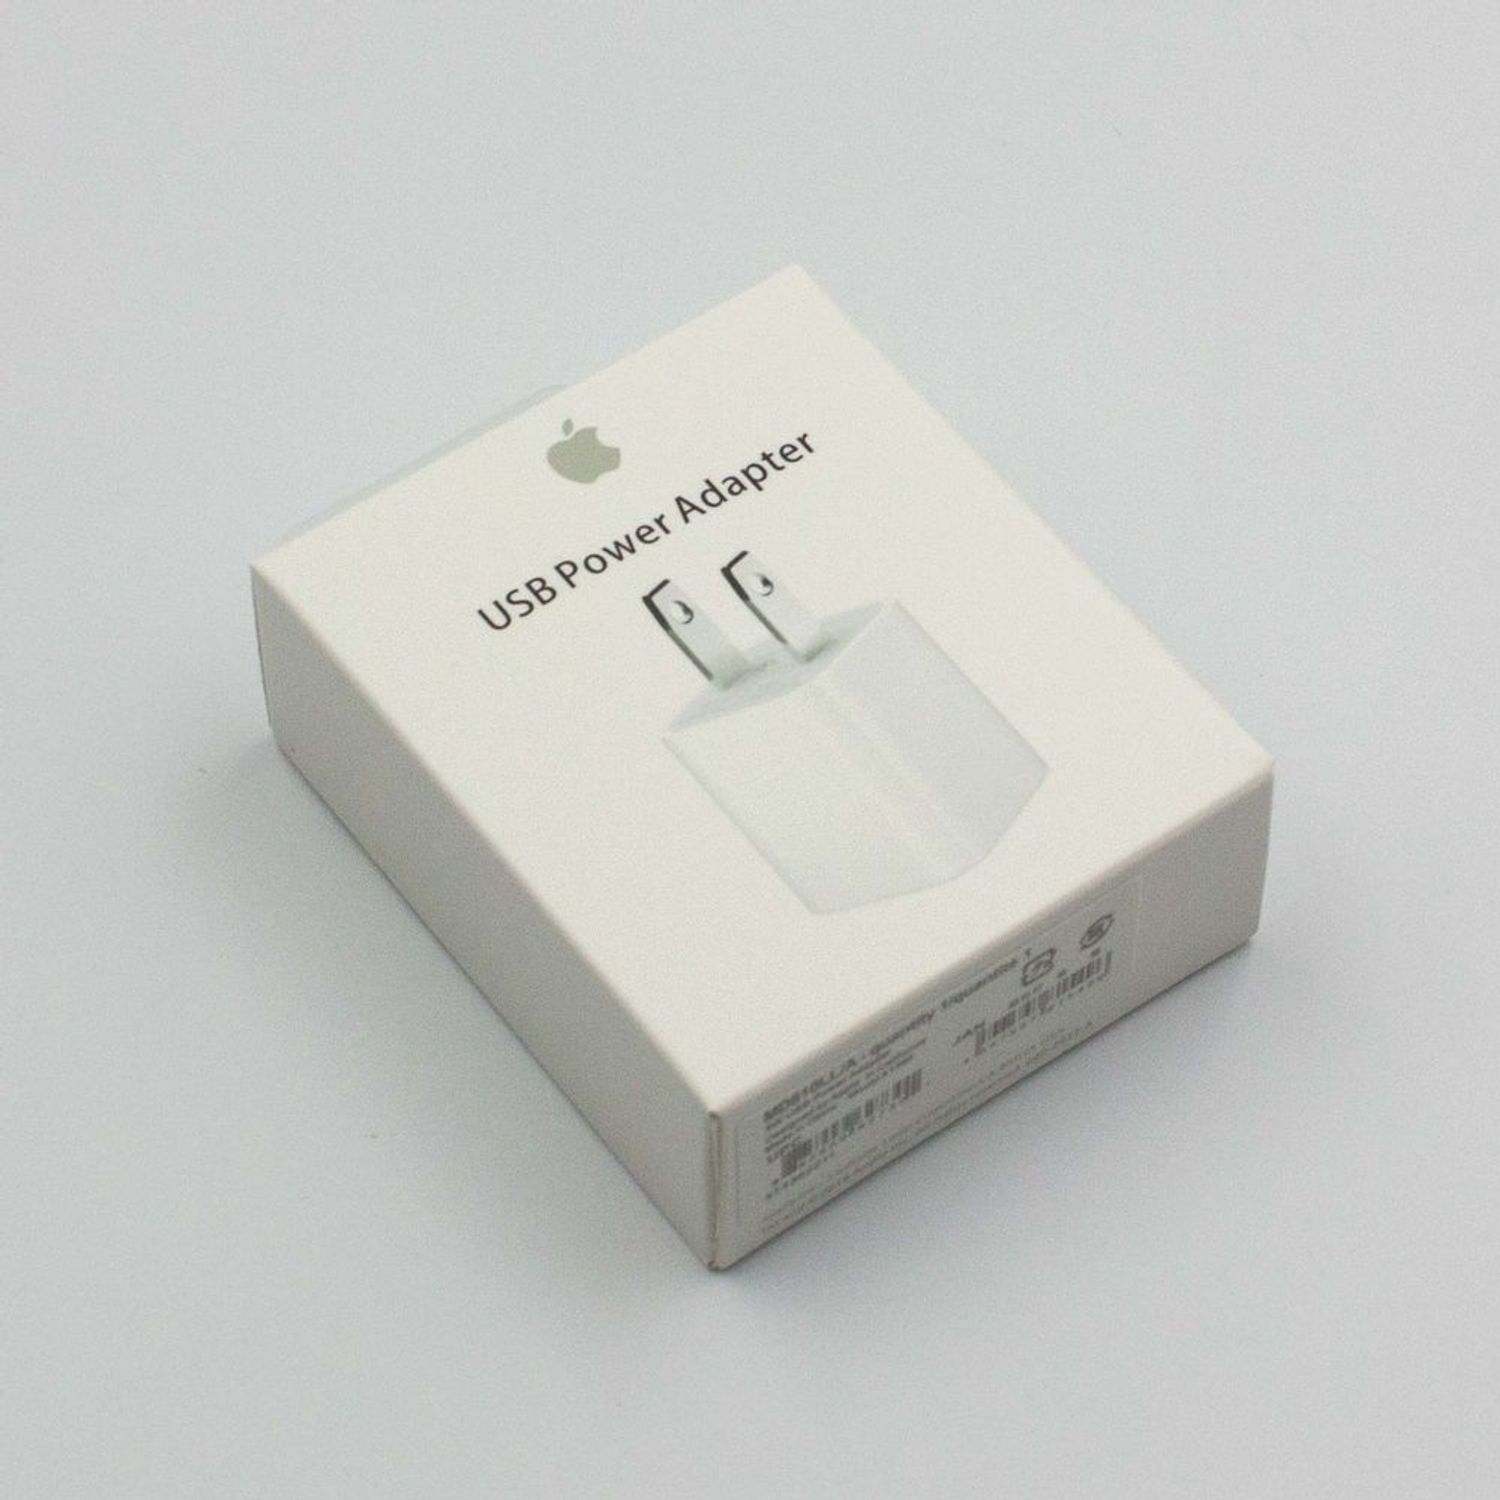 Cargador USB power 5W adapter Apple Certificado - para iPhone